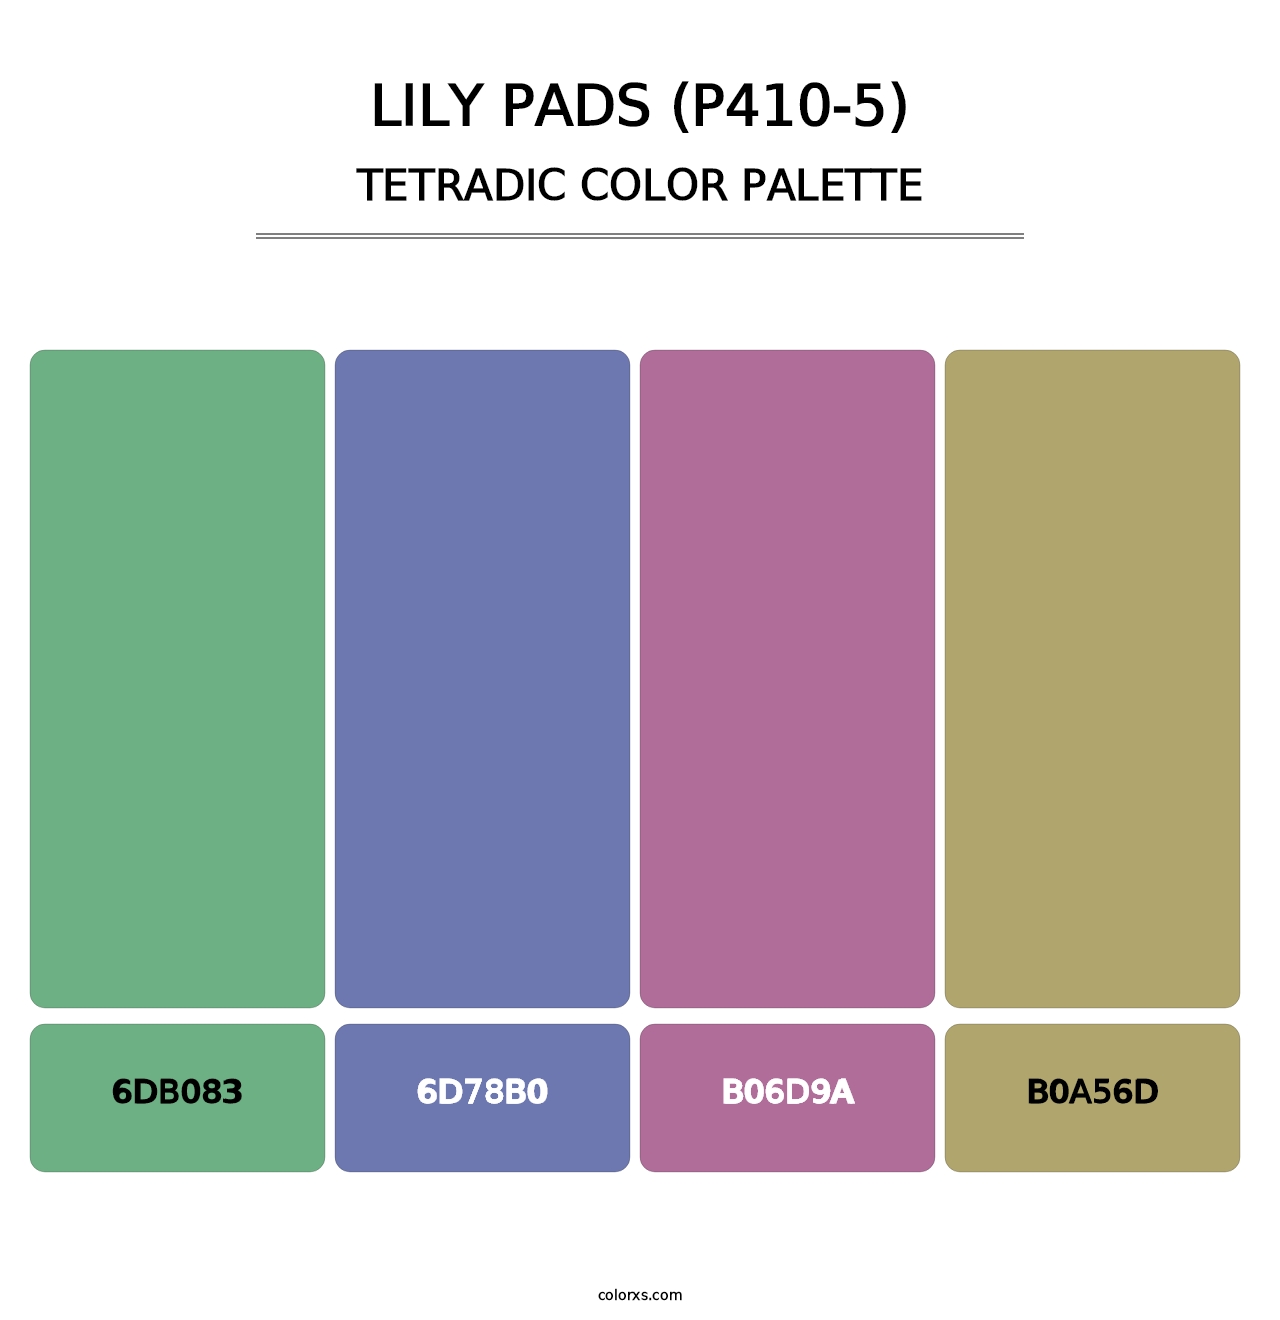 Lily Pads (P410-5) - Tetradic Color Palette